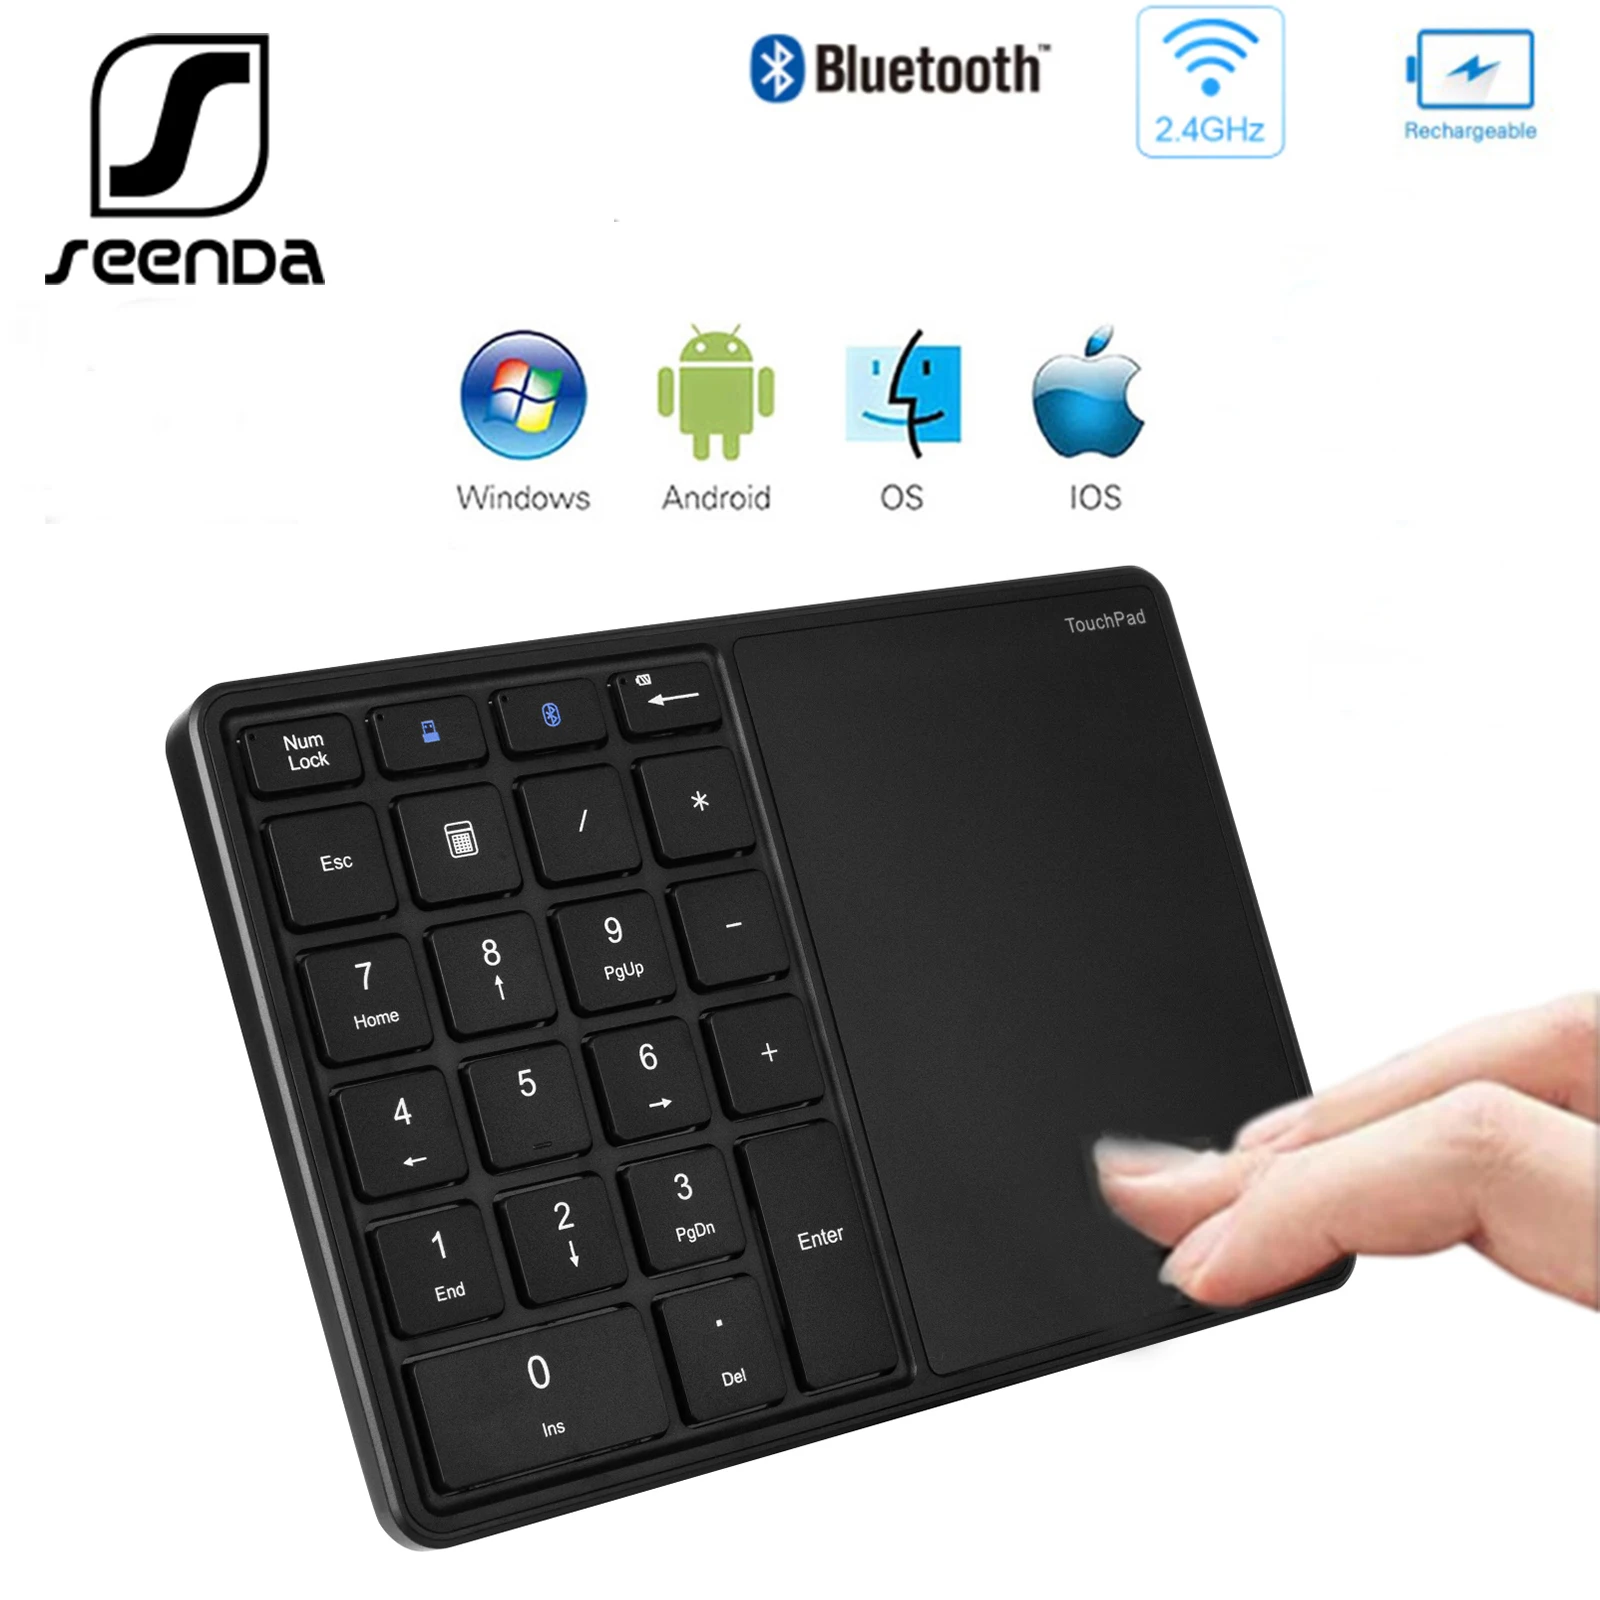 

SeenDa 2.4G Bluetooth Keyboard Numeric Keypad 22 Keys Digital Keyboard with Touchpad for Windows IOS Mac OS Android PC Tablet